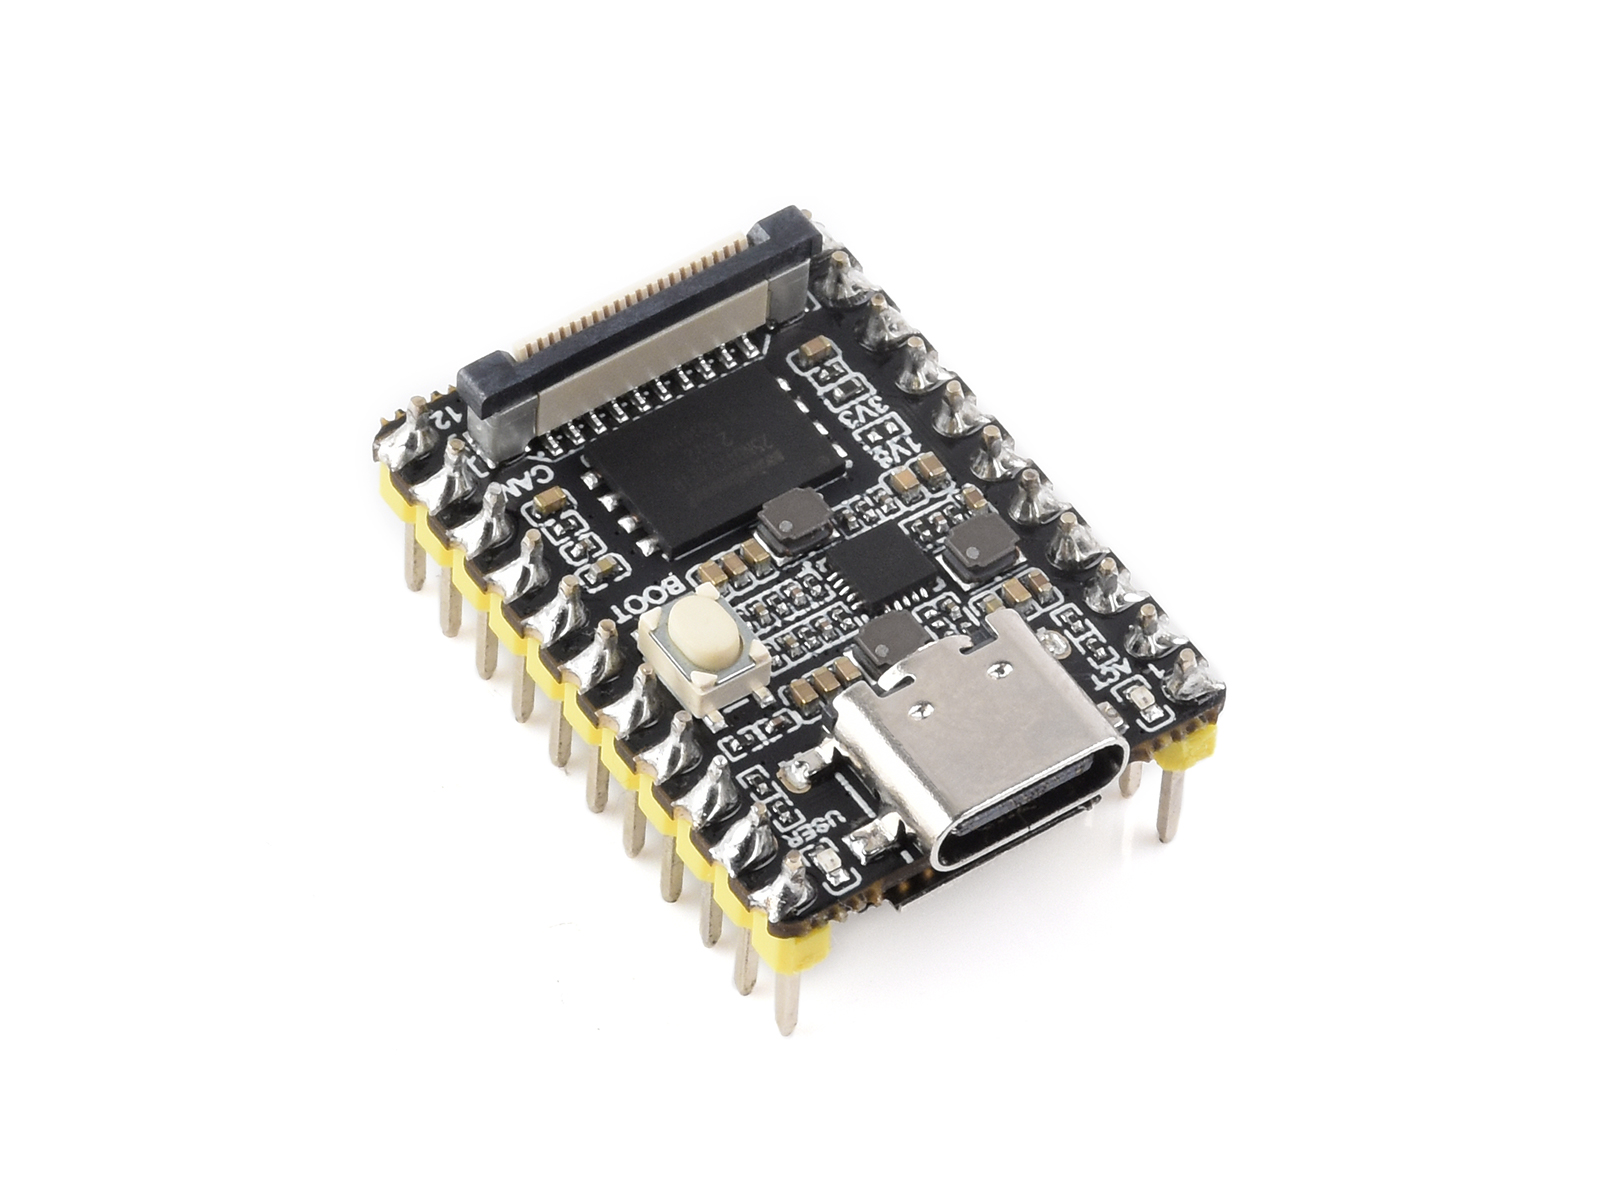 Luckfox Pico Mini B 幸狐RV1103微型Linux开发板  集成ARM Cortex-A7/RISC-V MCU/NPU/ISP等处理器 加焊黄色排针